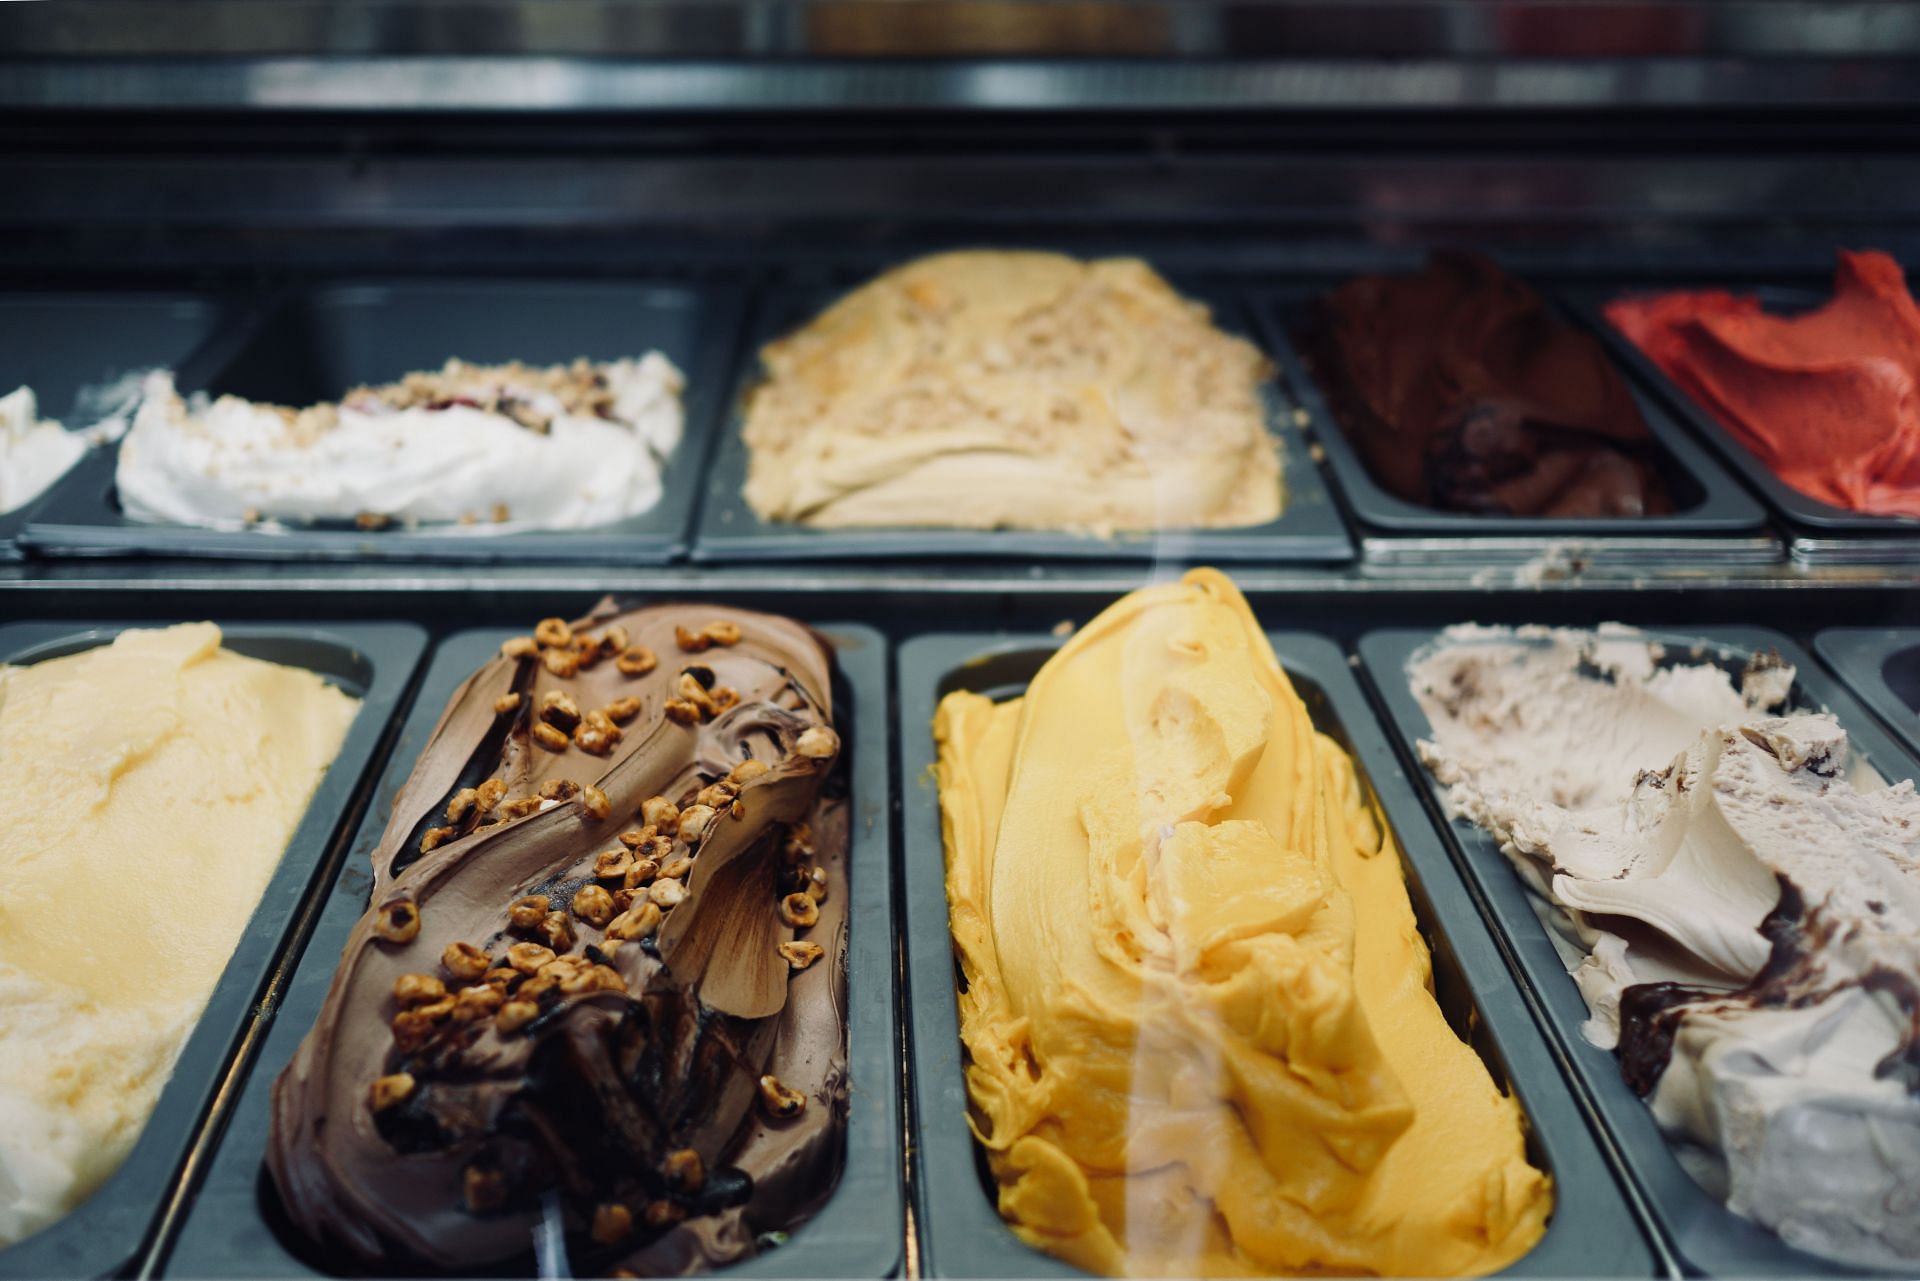 Having ice cream every day can cause weight gain. (Image via Unsplash/Erwan Hesry)